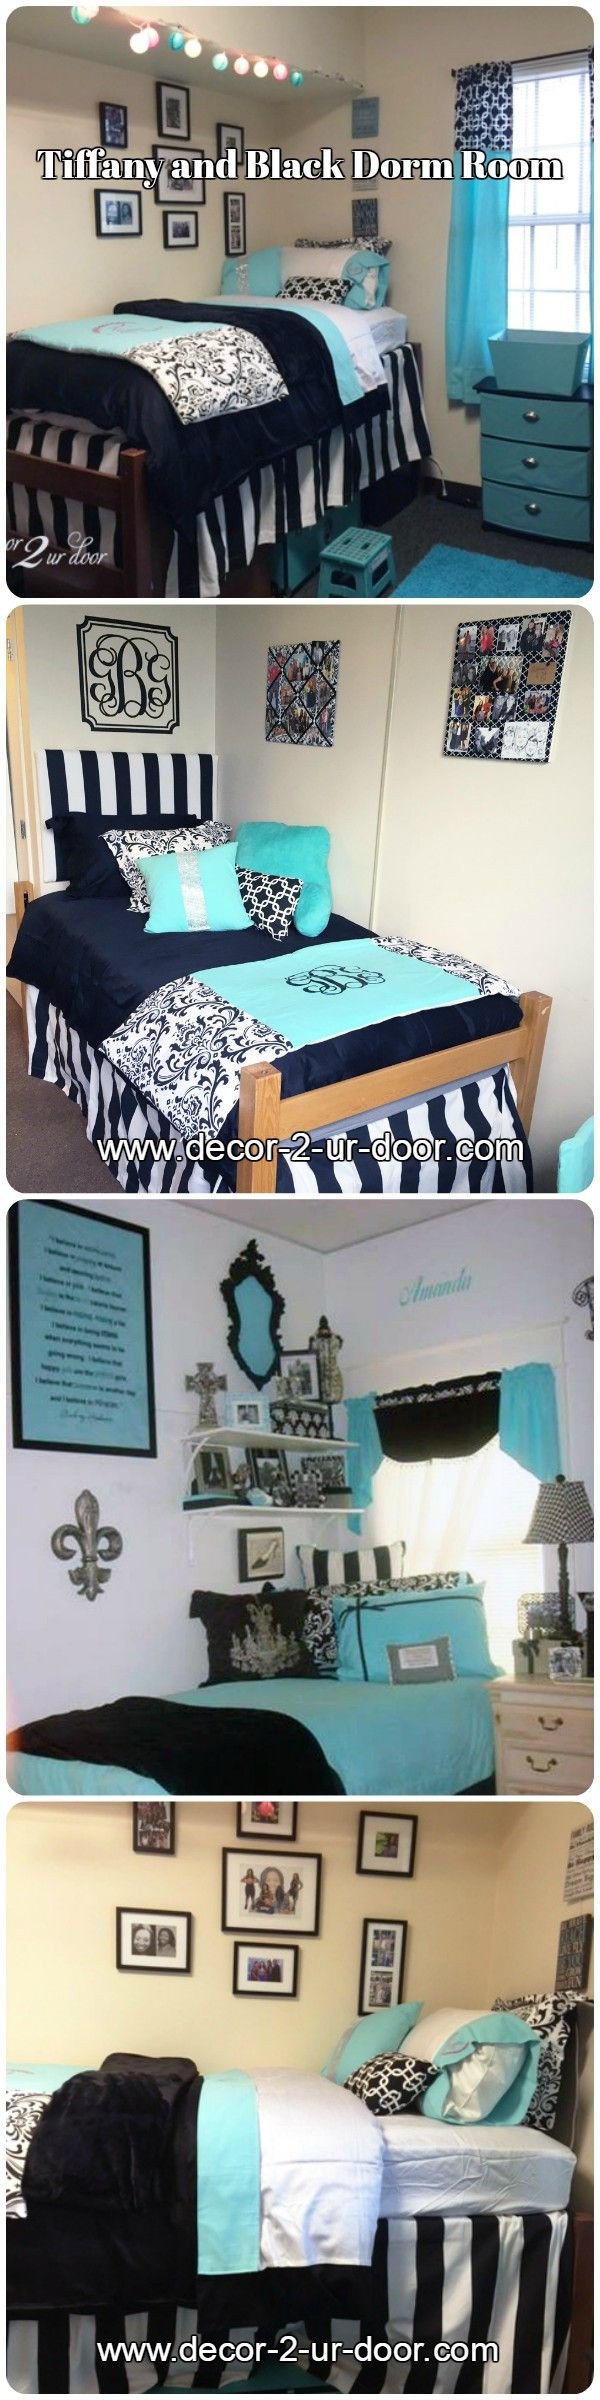 Tiffany Blue Bedroom Ideas New Tiffany and Black Dorm Rooms From Decor 2 Ur Door Design